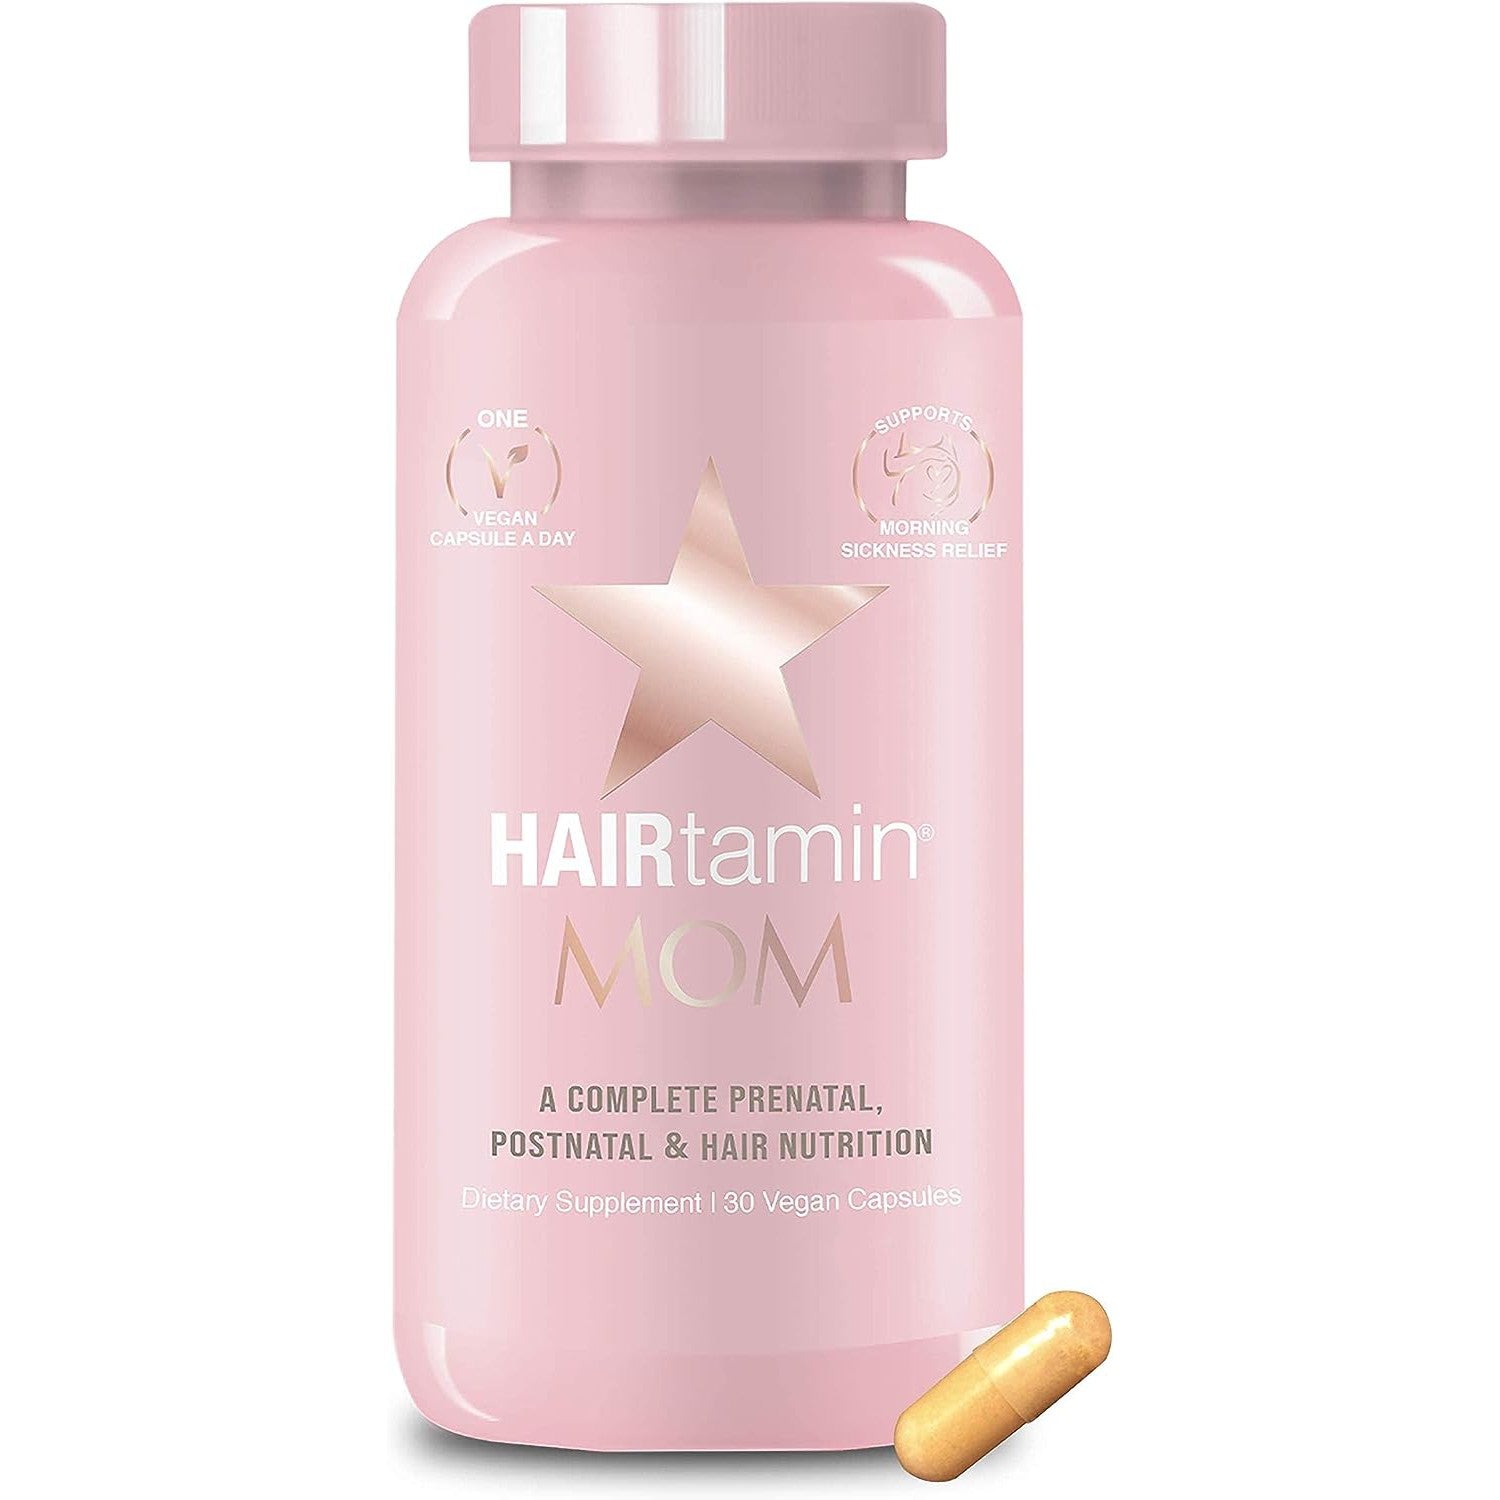 HAIRtamin MOM Vegan Prenatal & Postnatal Multivitamin Supplement During Pregnancy, Postpartum or Breastfeeding with Probiotic 30 Vegan Capsules